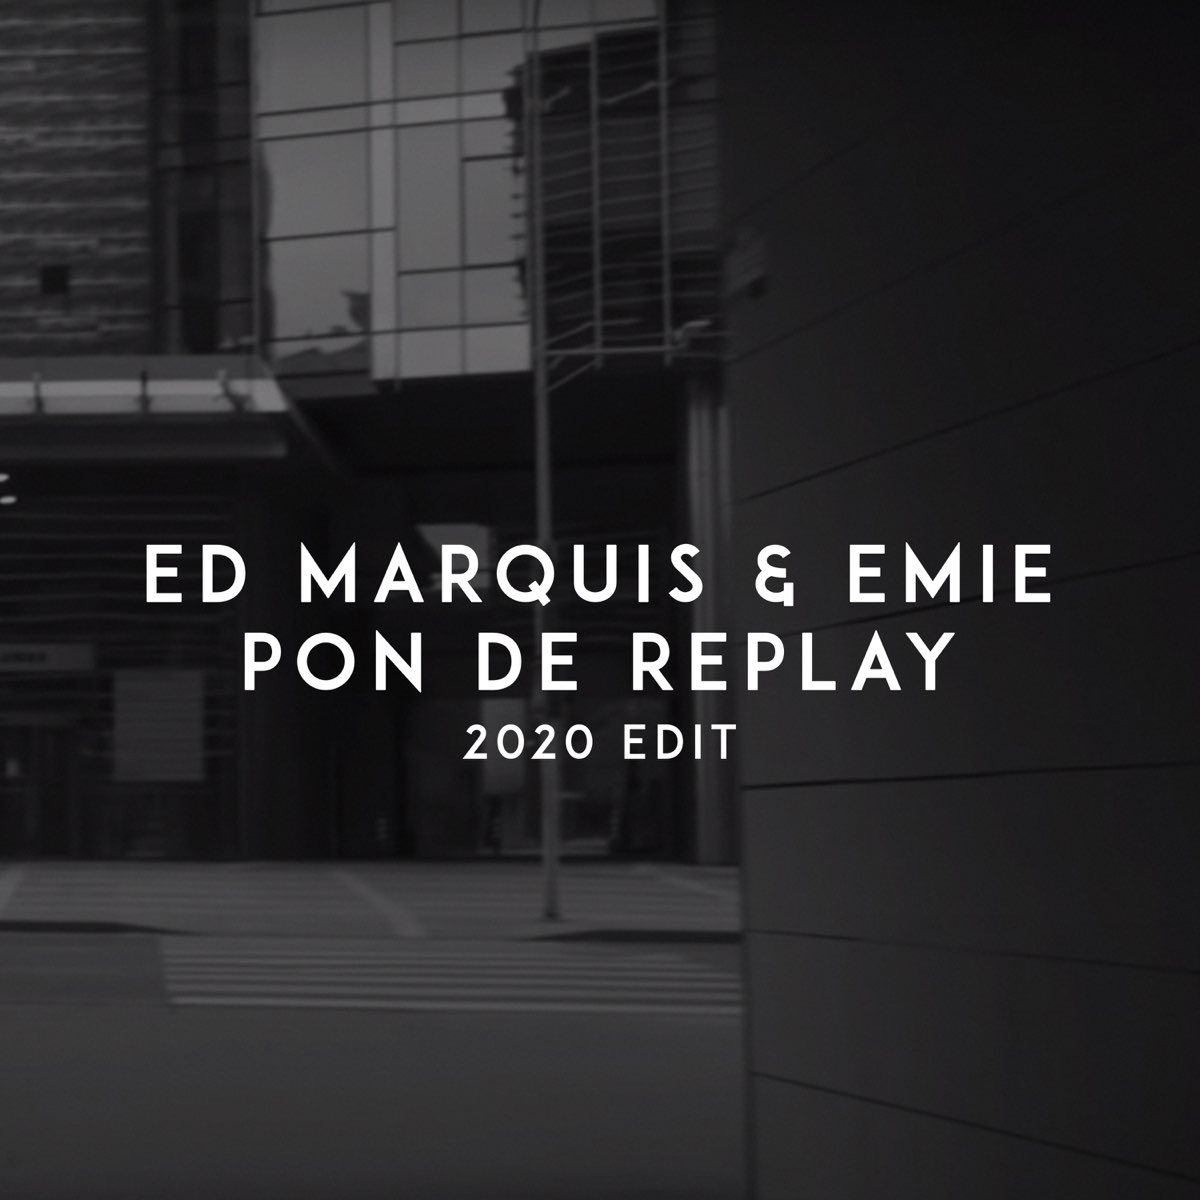 Pon de Replay 2020 Edit ed Marquis, Emie. Ed Marquis, Emie. Ed Marquis, Emie - Pon de Replay. Ed Marquis .feat Emie - Pon de Replay.